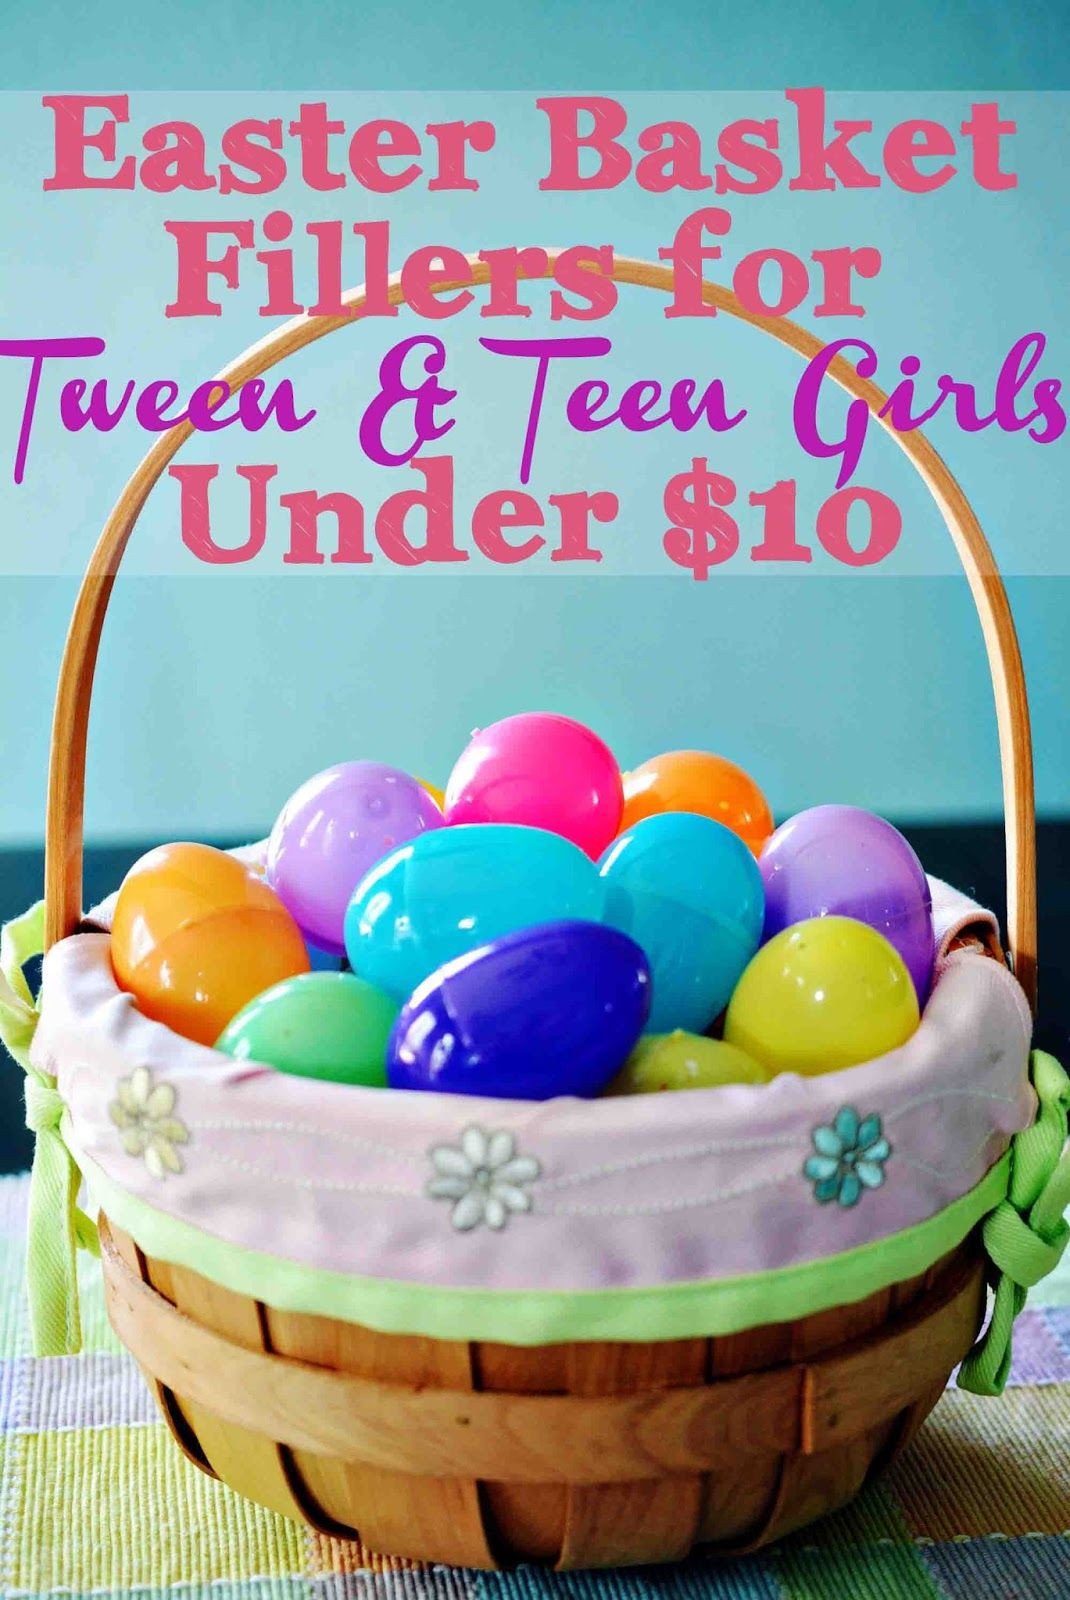 Tween Girl Easter Basket Ideas
 Pin on Easter bunny